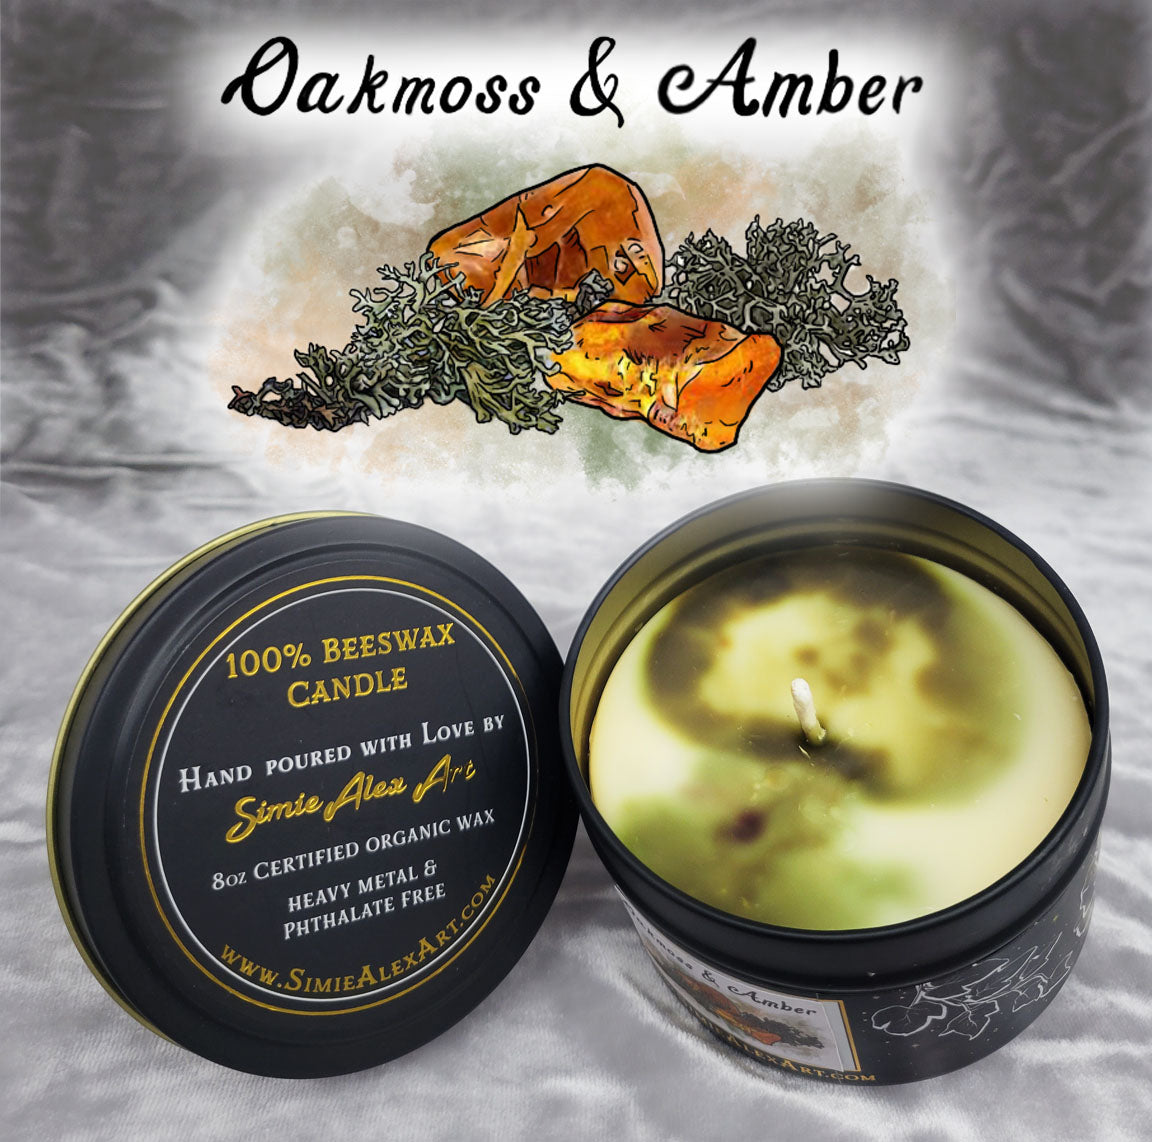 Oakmoss & Amber Beeswax Candle